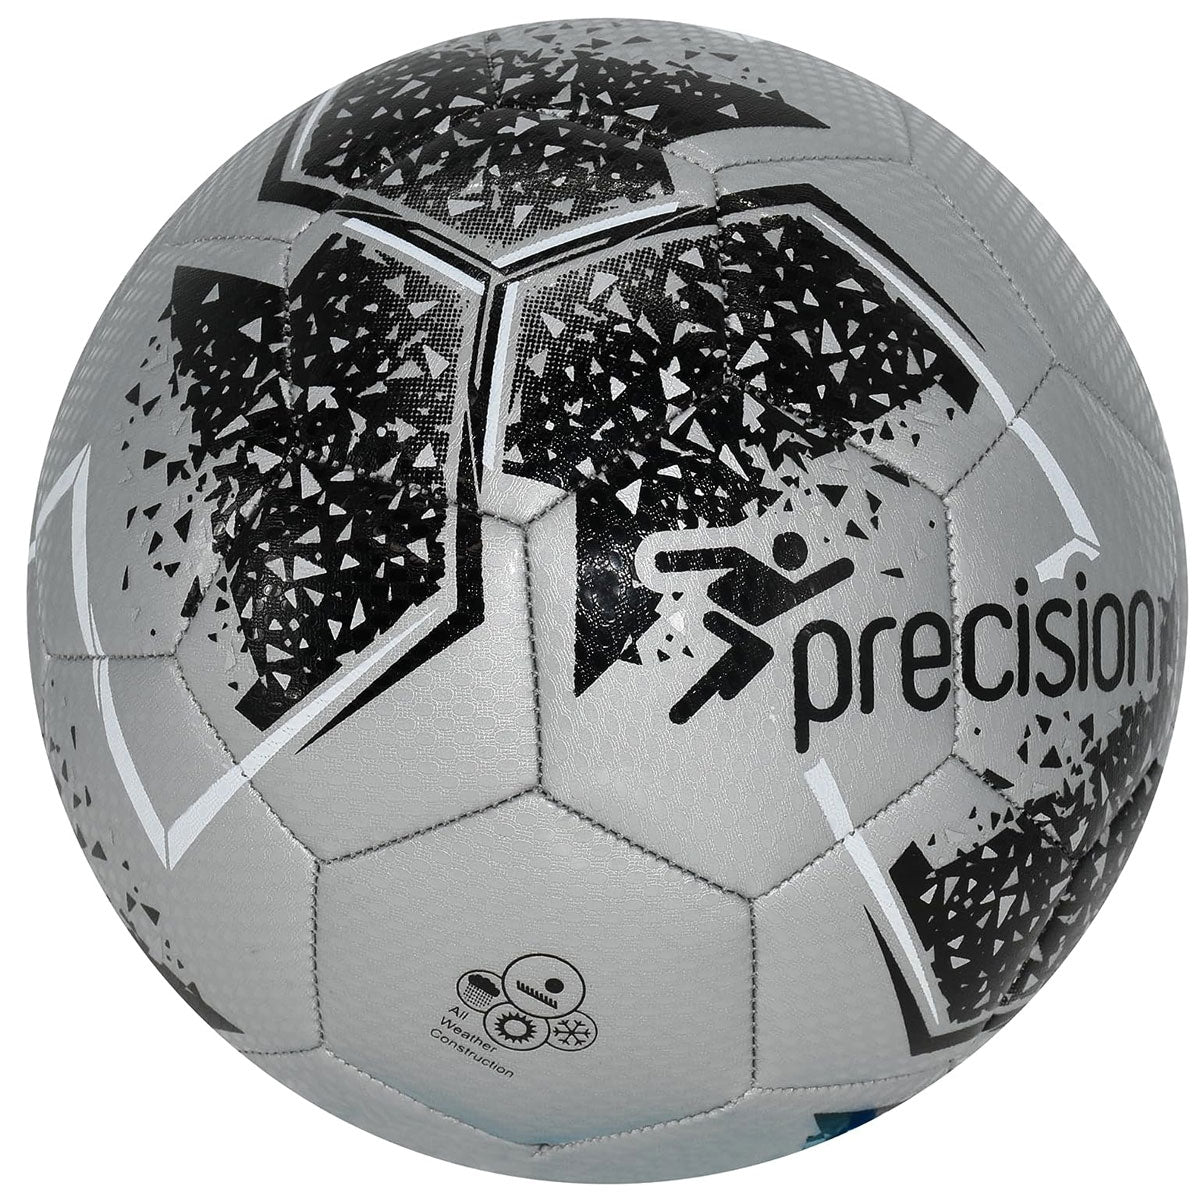 Precision Training Mini Training Ball - Size 1